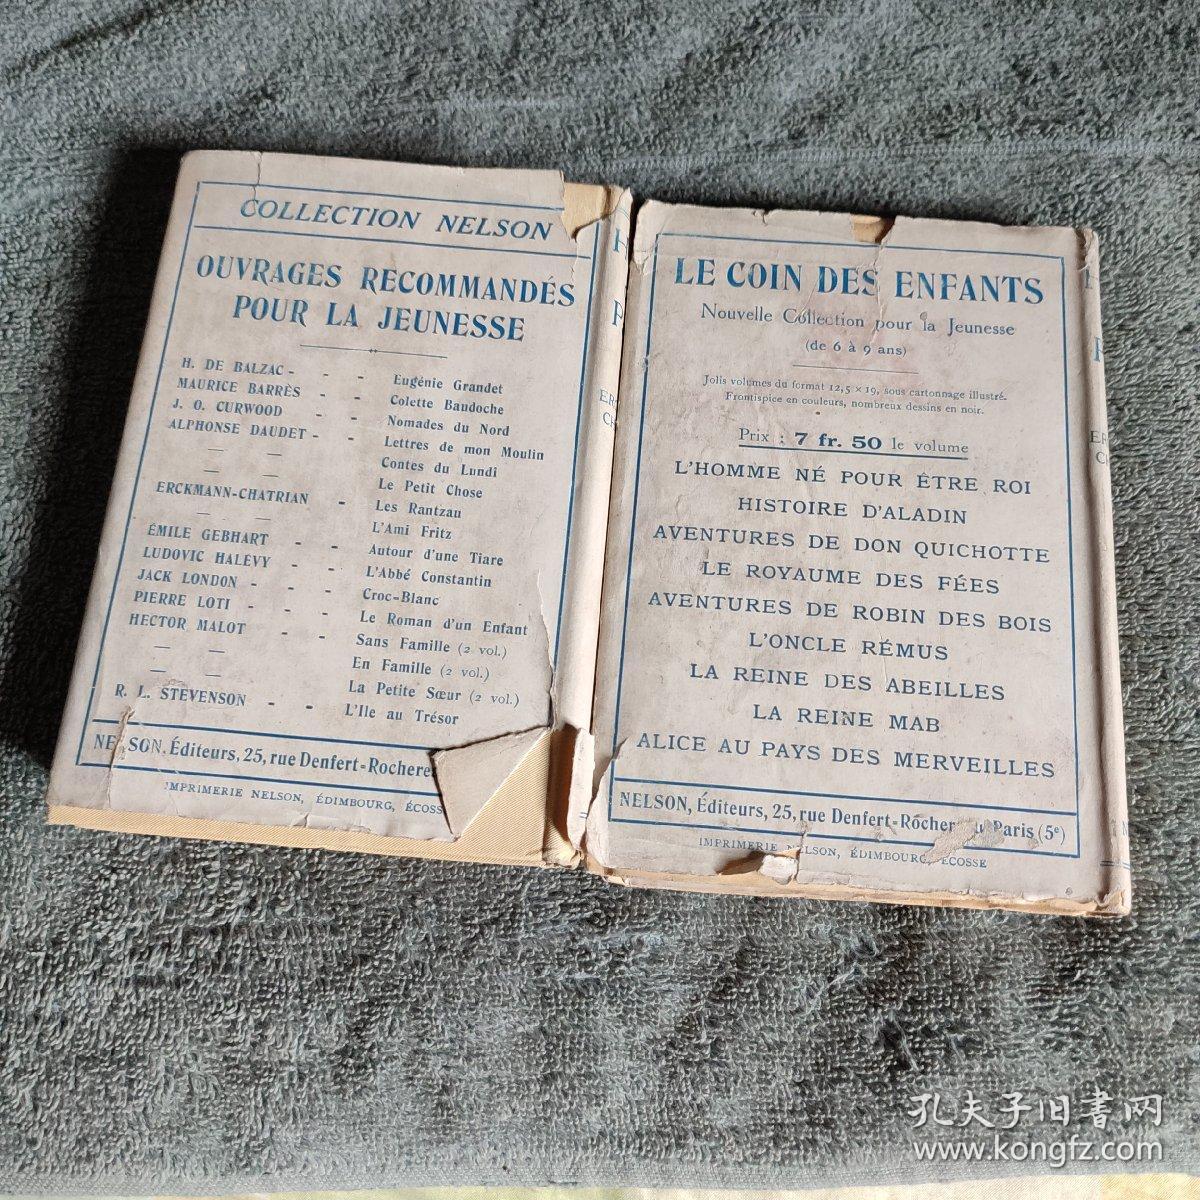 Histoire d`un Paysan Tome 2、3（两册合售）布面精装 1933年民国版 原版 有详图